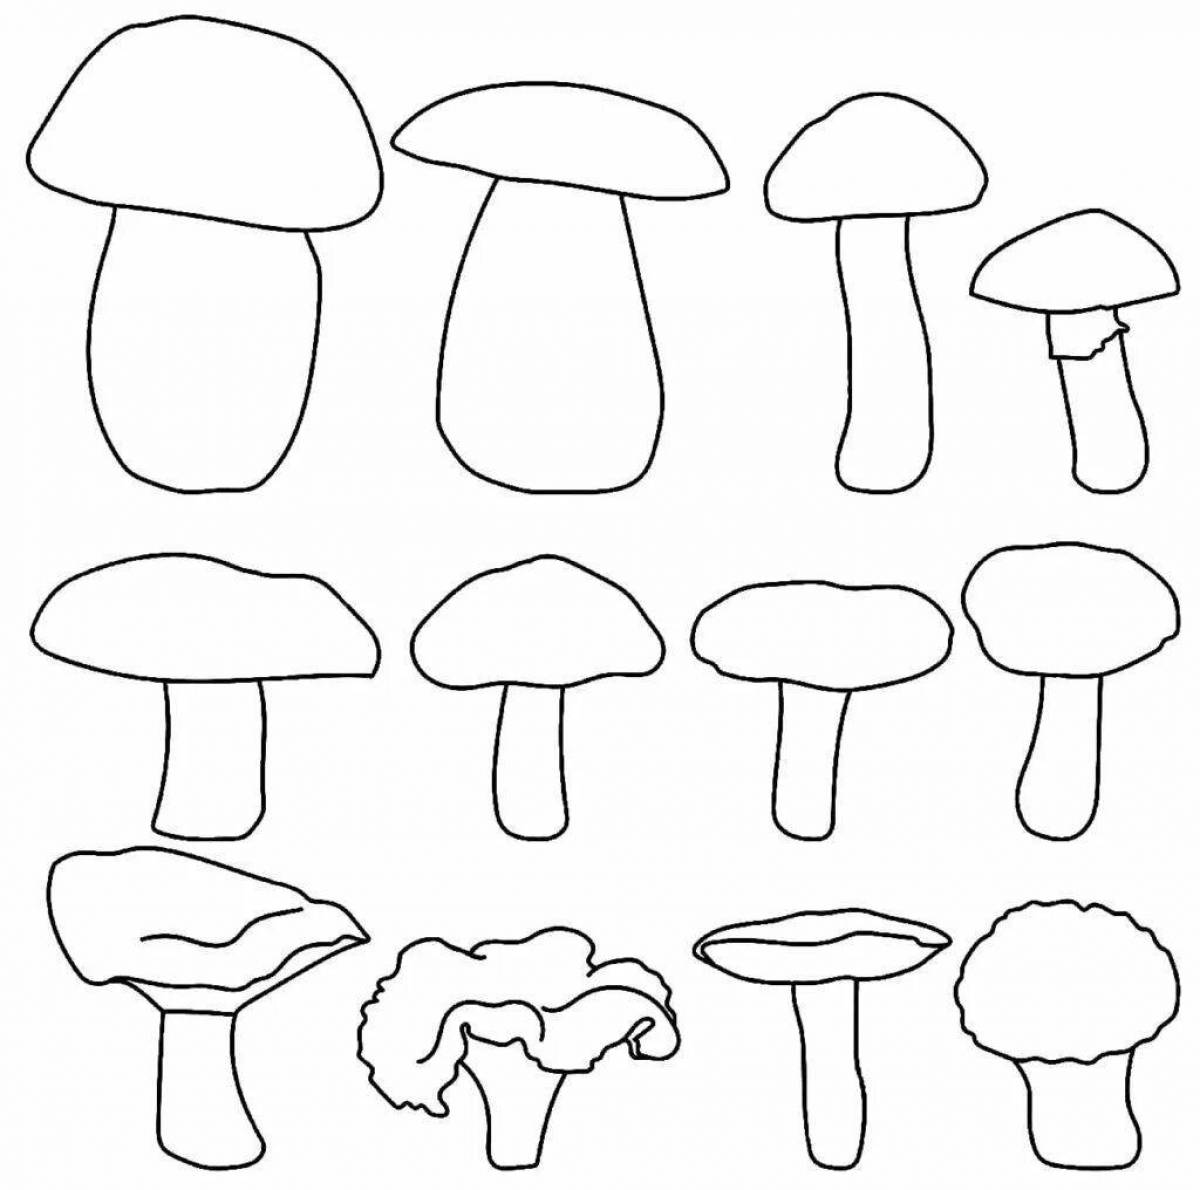 Outstanding porcini mushroom coloring book for kids